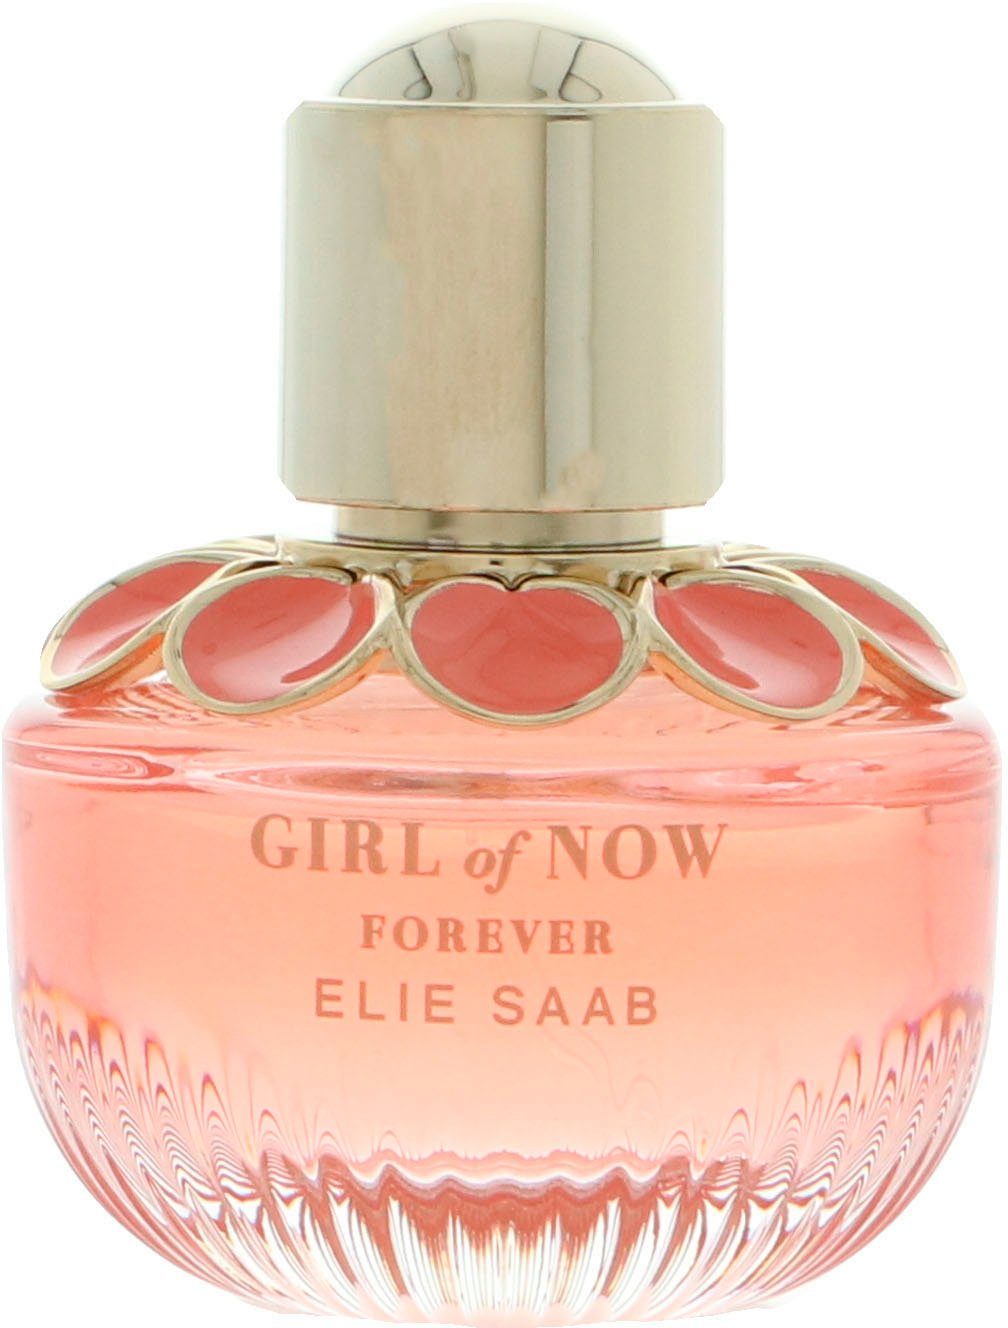 SAAB ELIE Eau Parfum Now Girl Forever de of